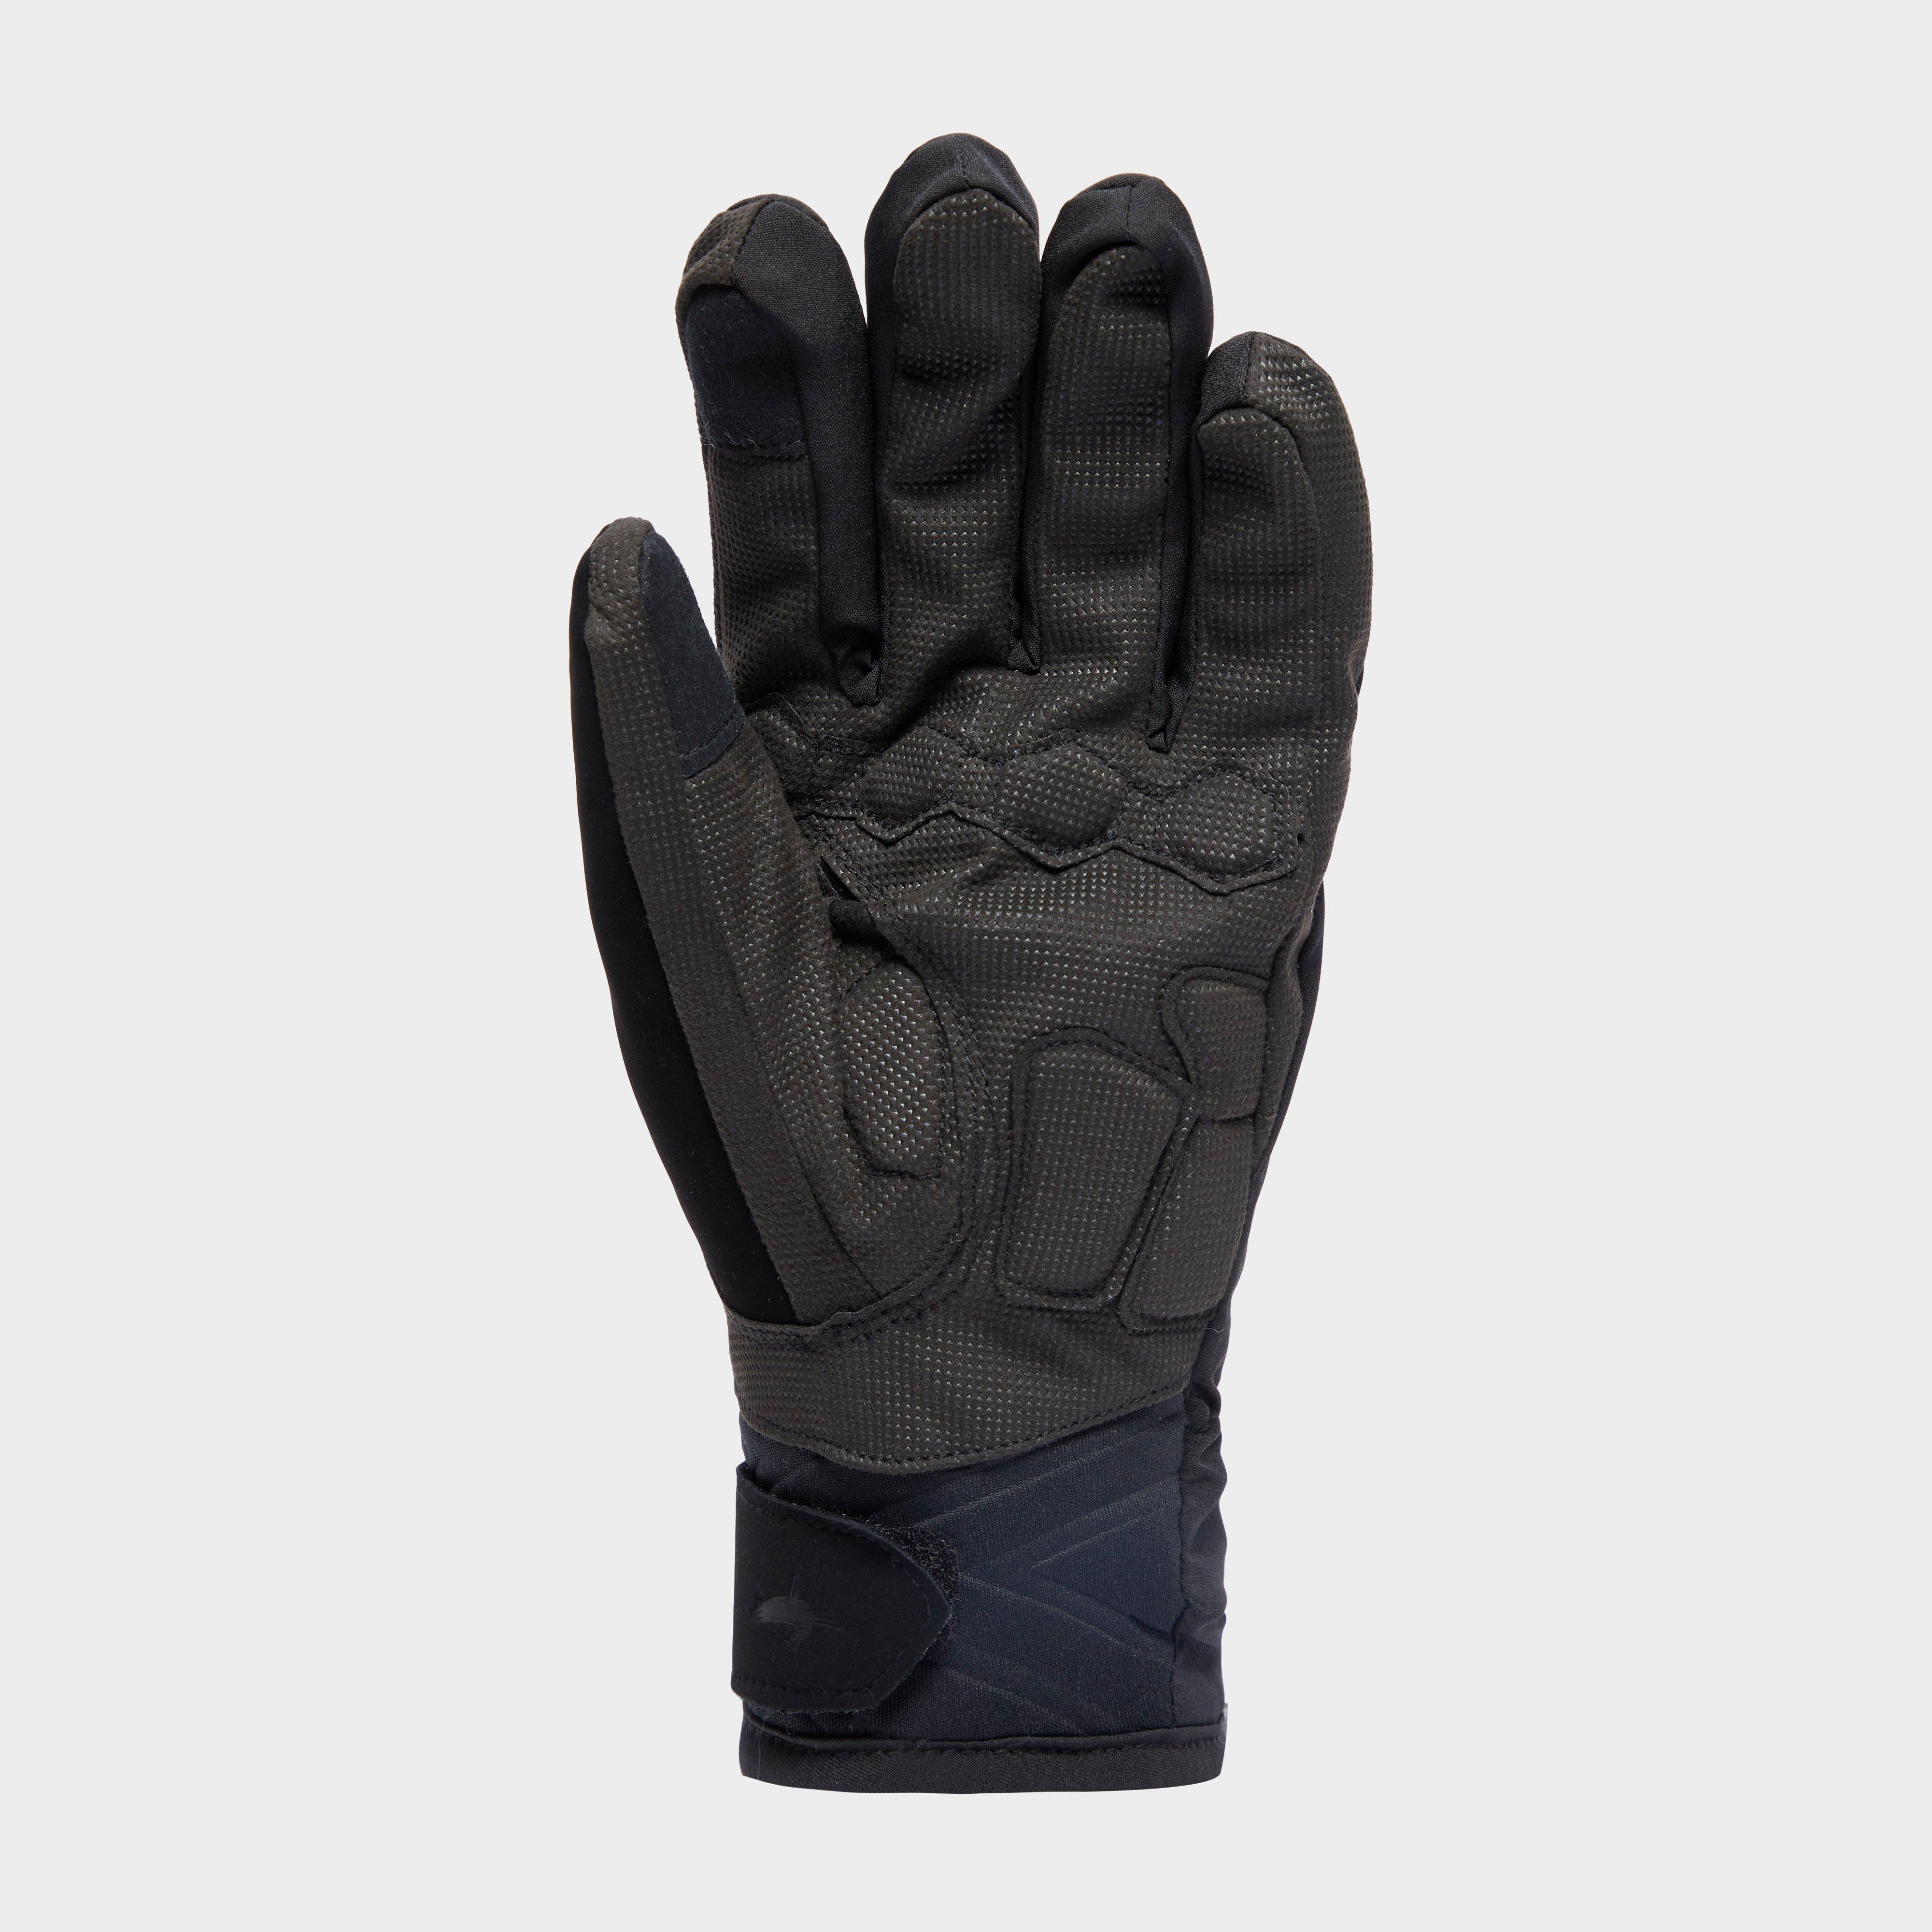 Sealskinz Men's Brecon Gloves Review